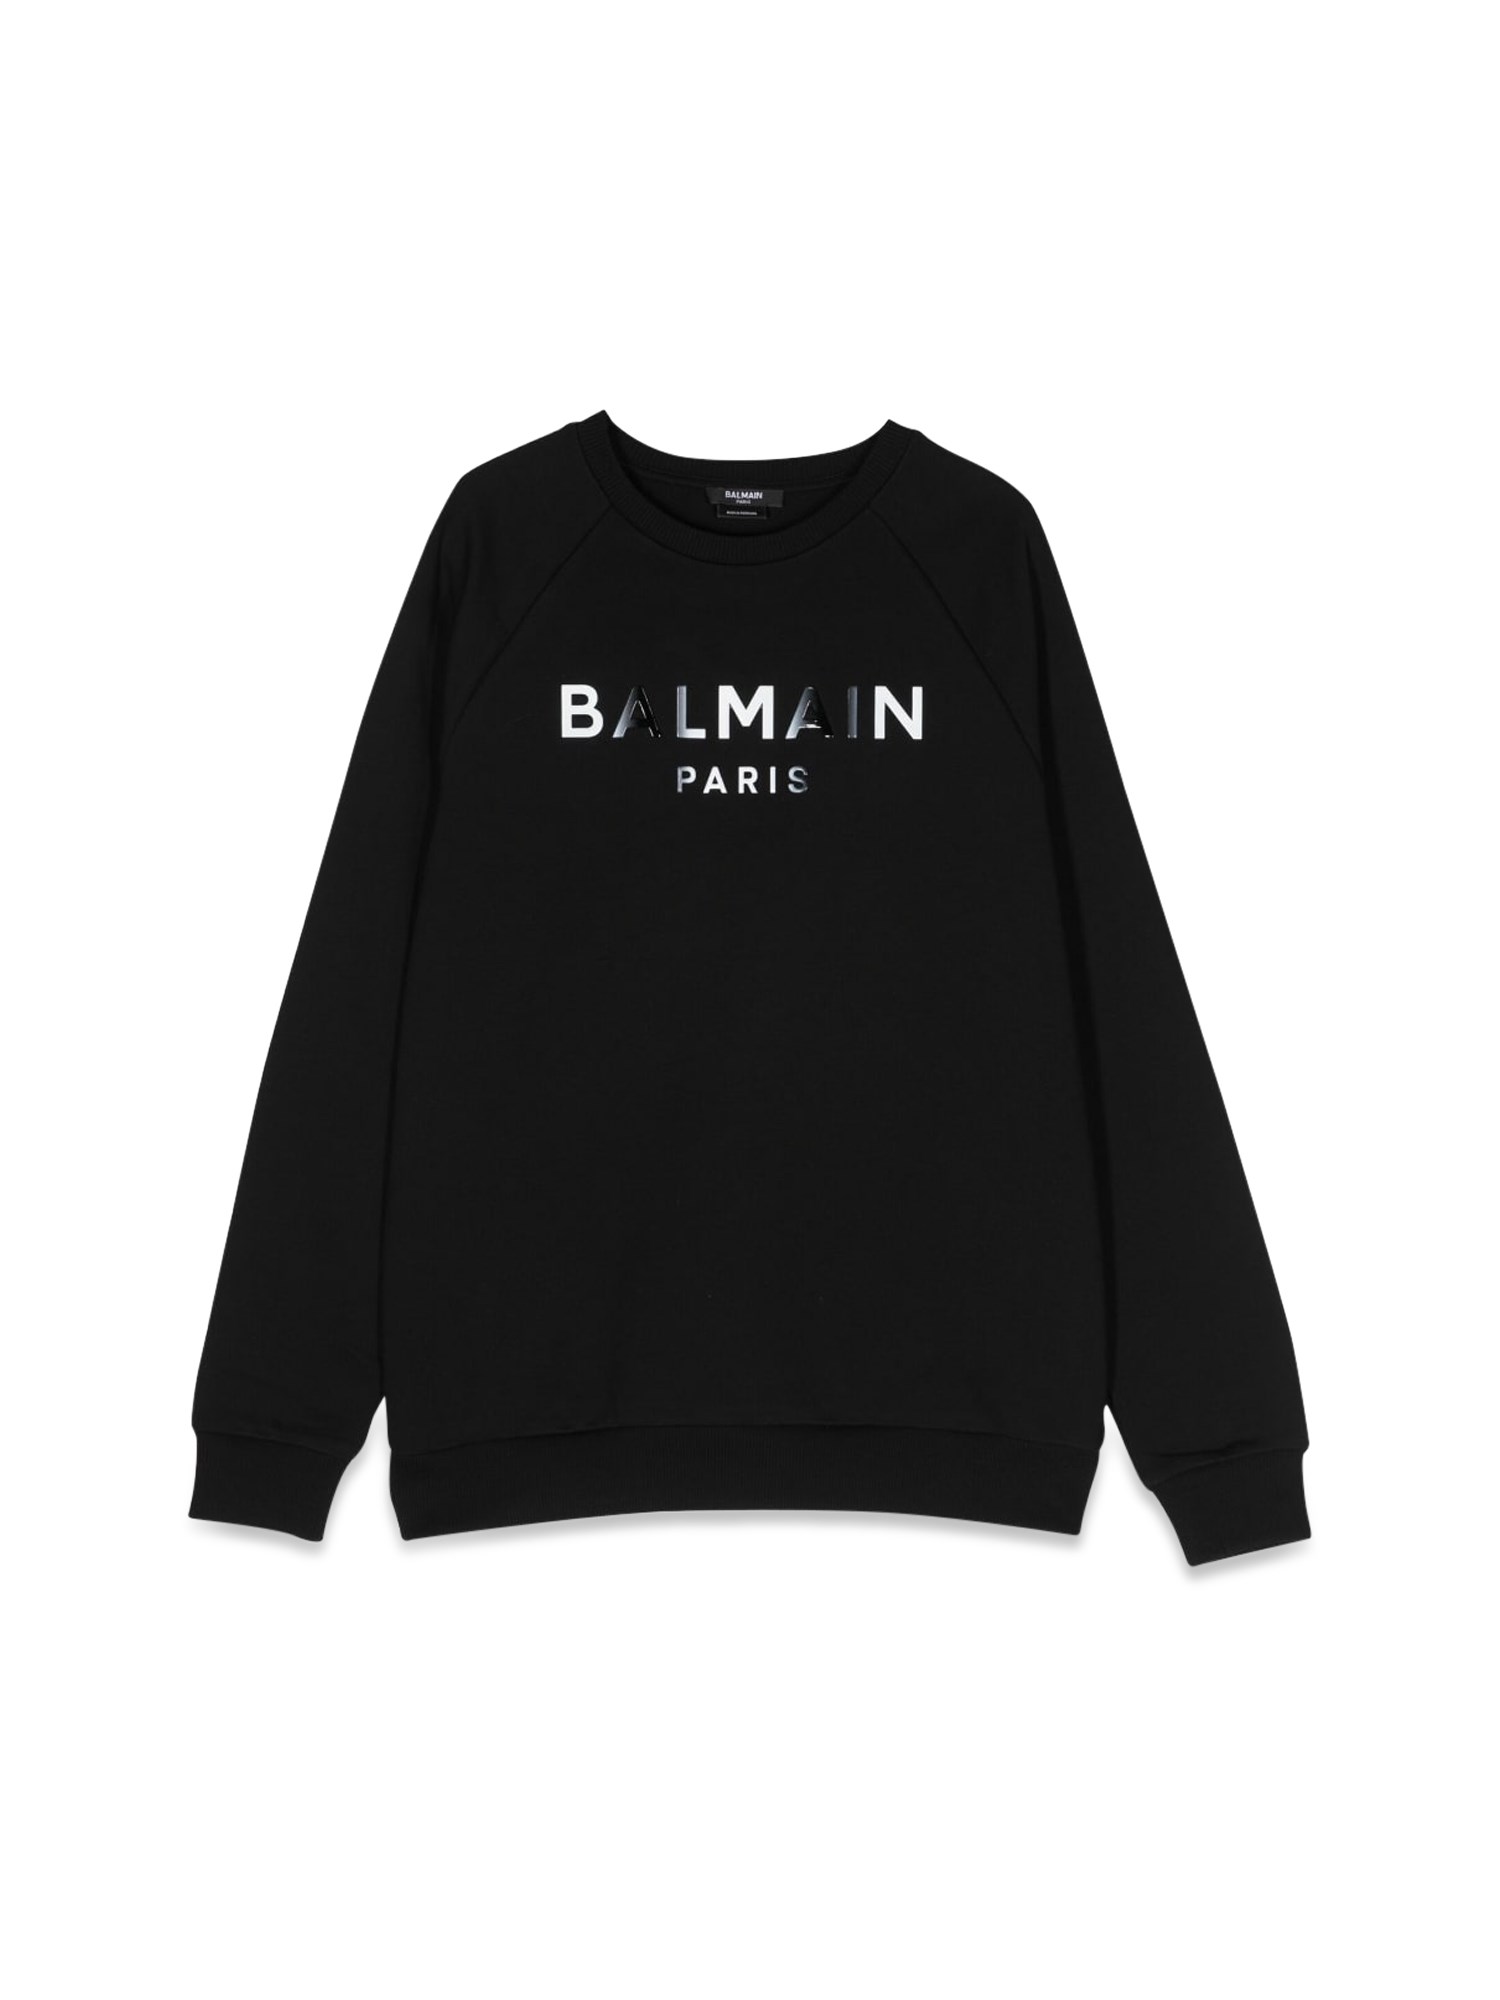 balmain logo crewneck sweatshirt